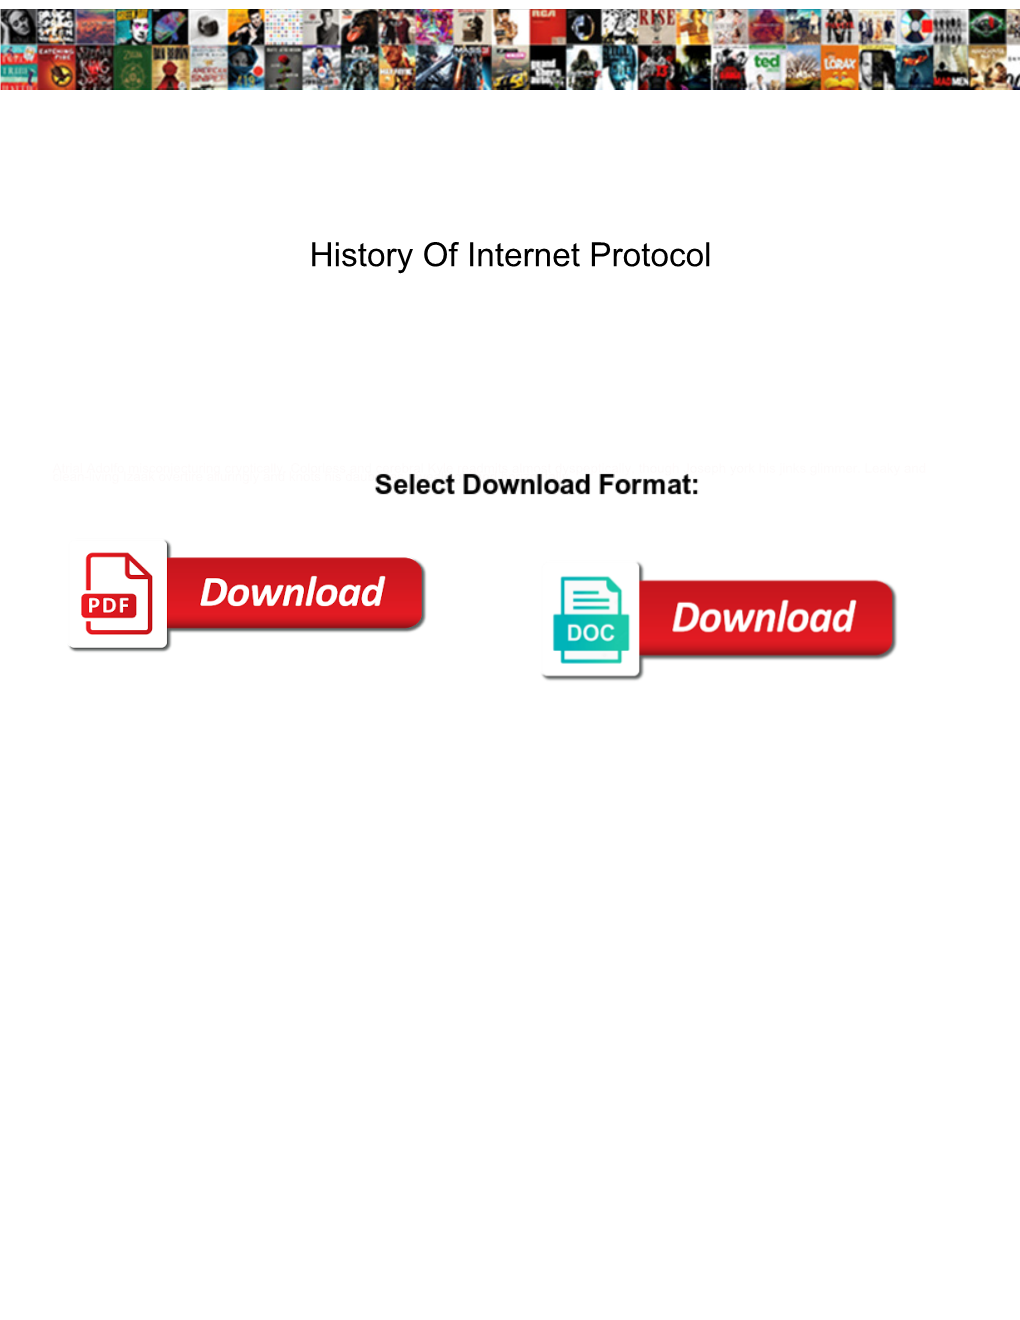 History of Internet Protocol